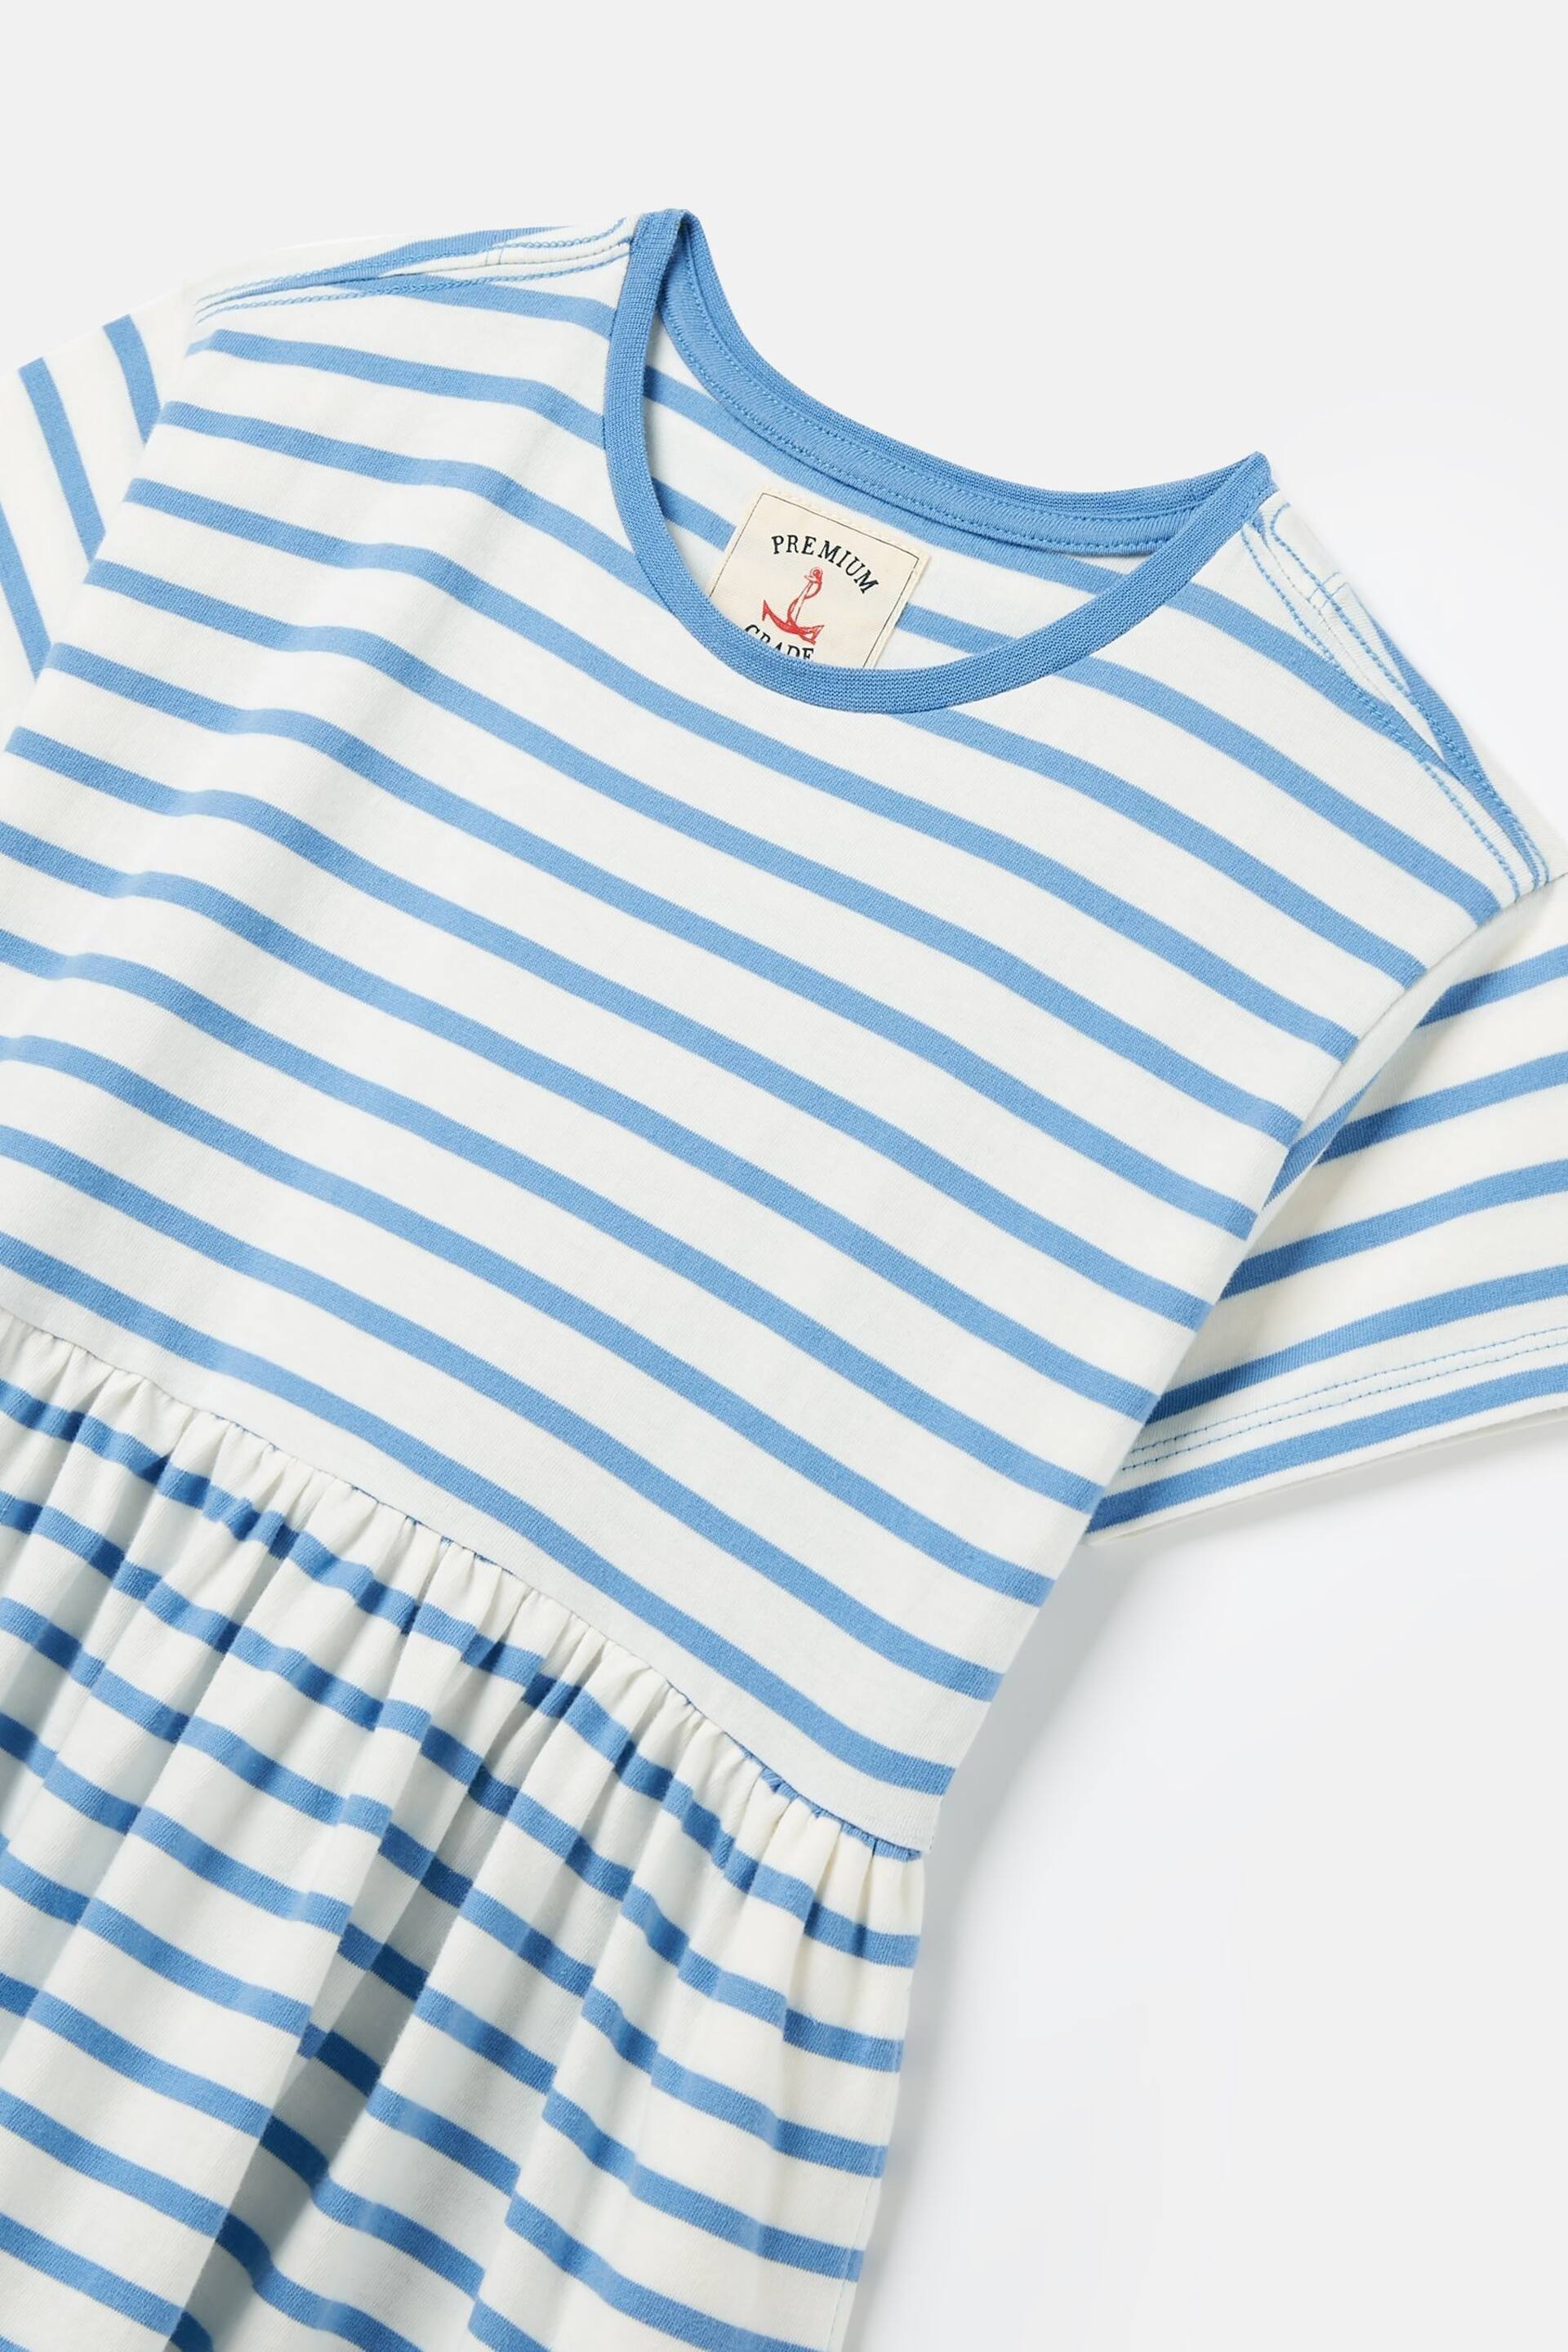 Joules Skye Blue Striped Jersey T-Shirt Dress - Image 8 of 10